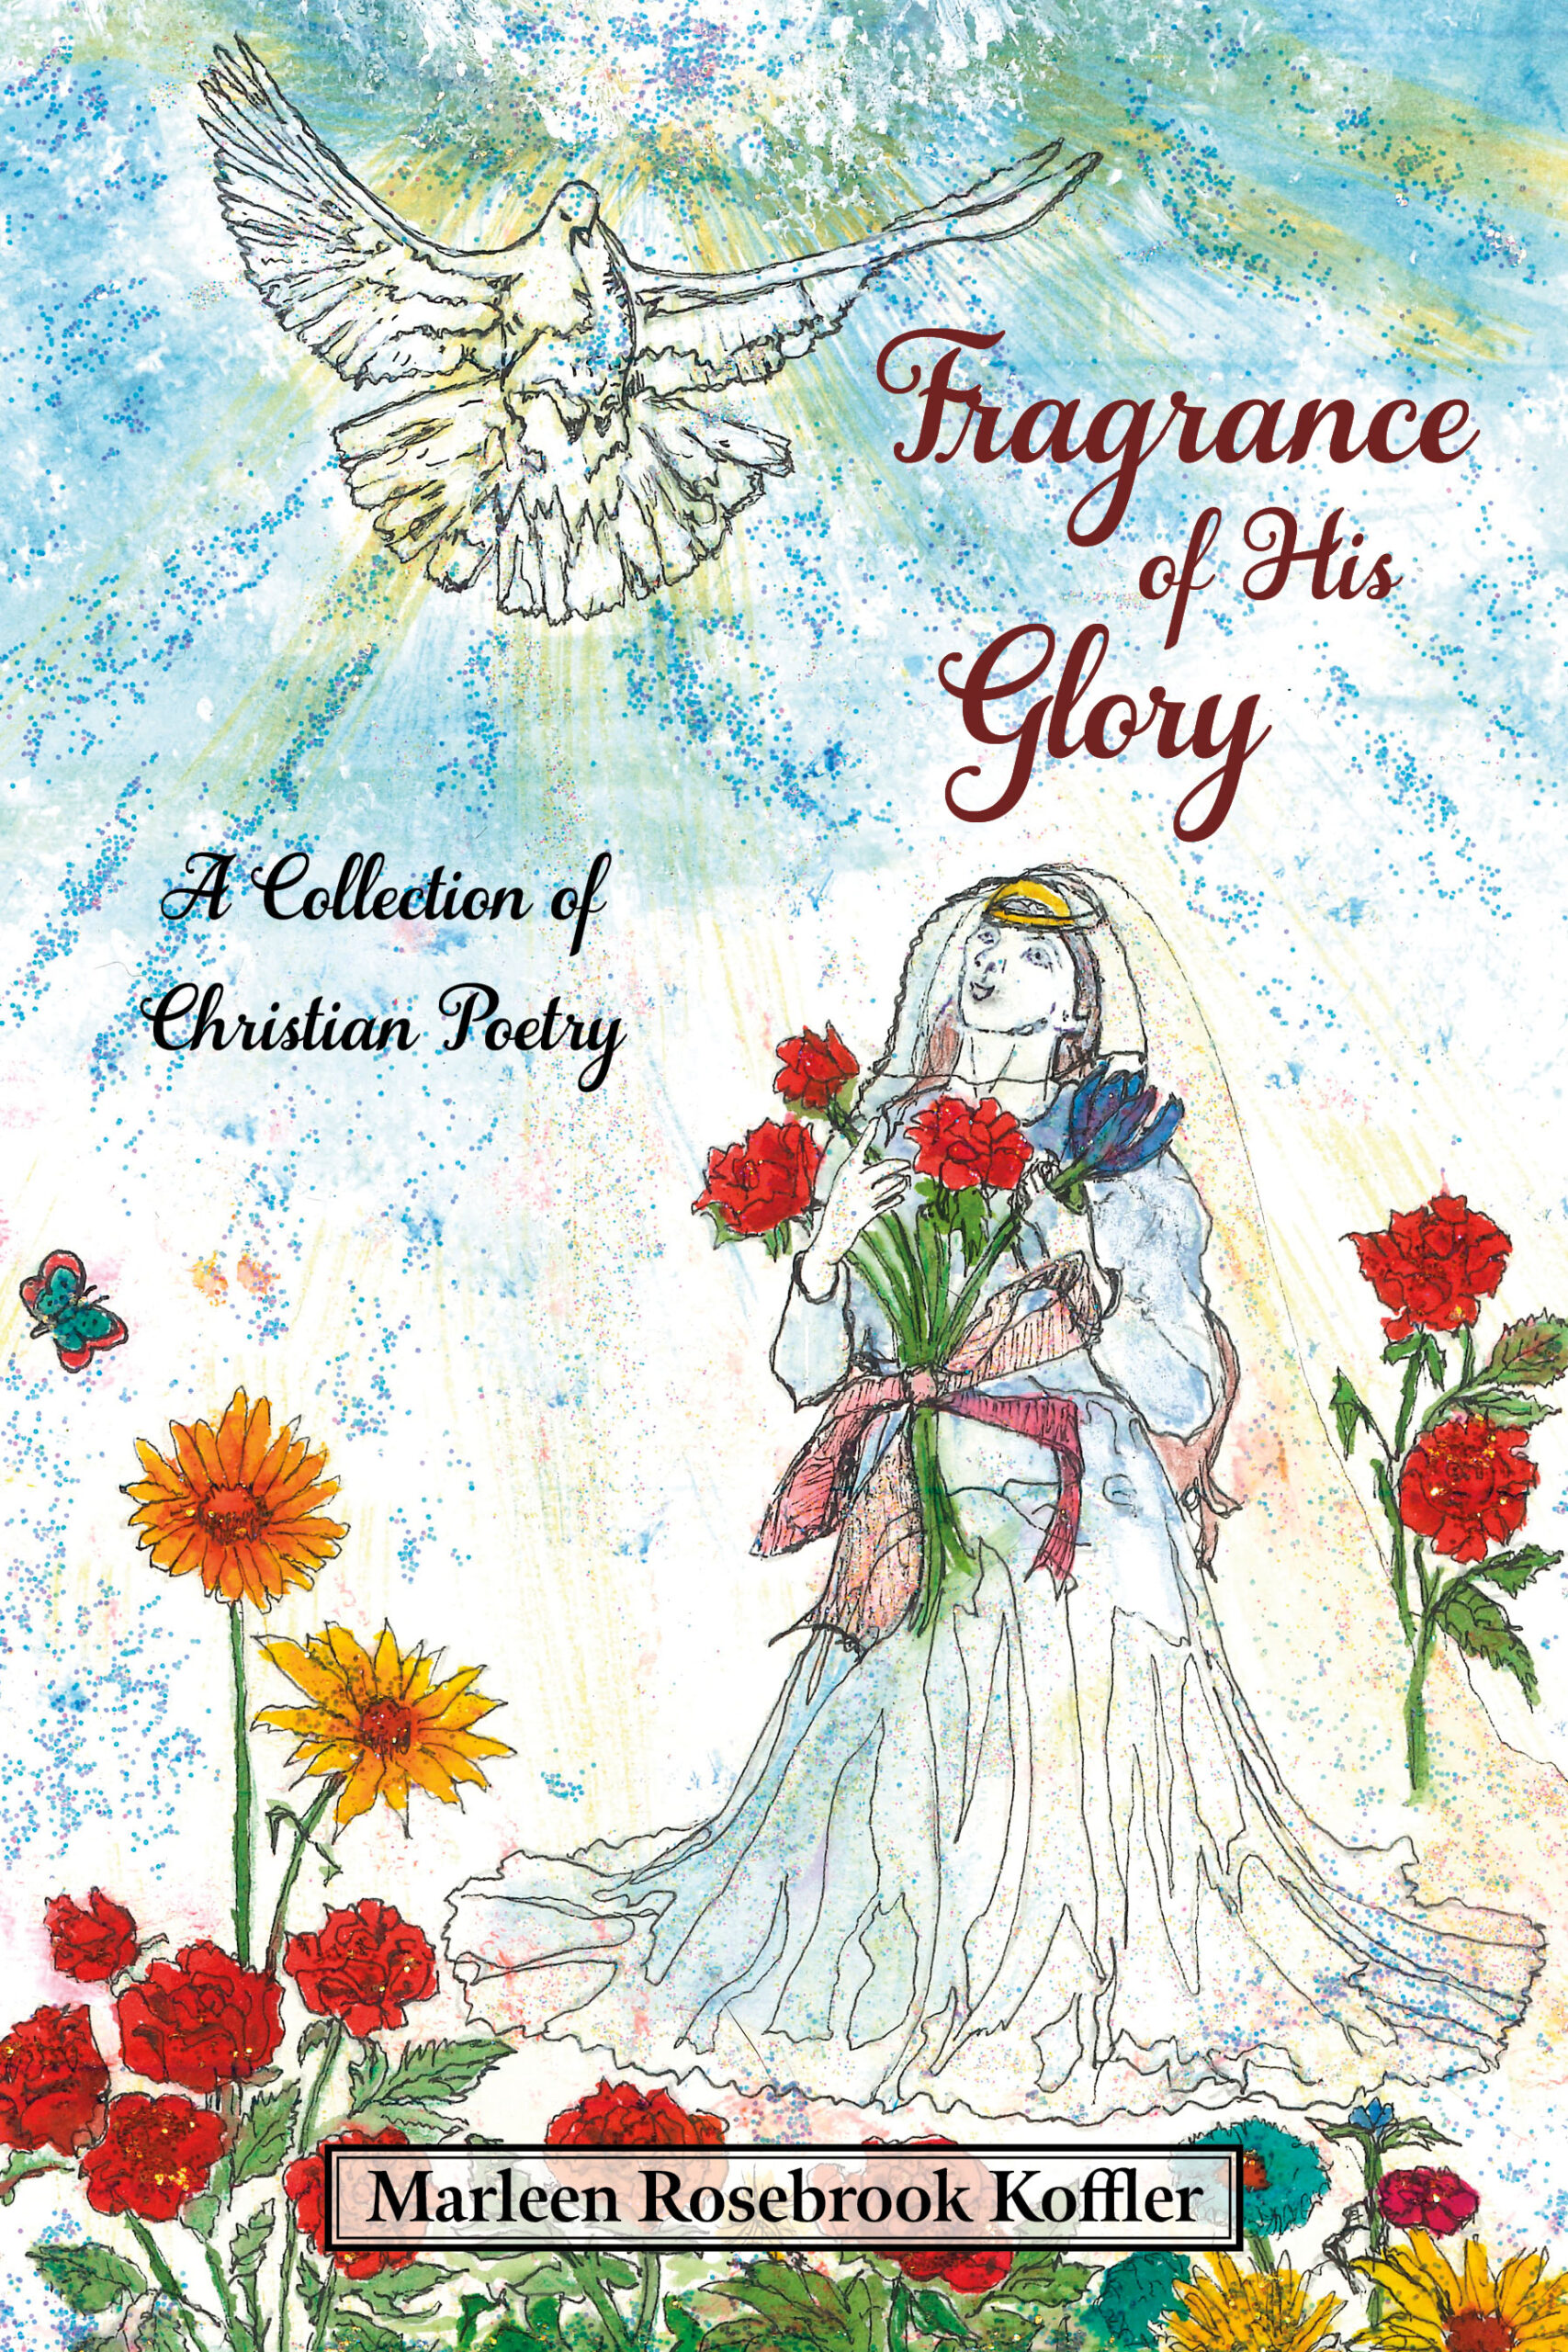 Fragrance of His Glory by Marleen Rosebrook Koffler